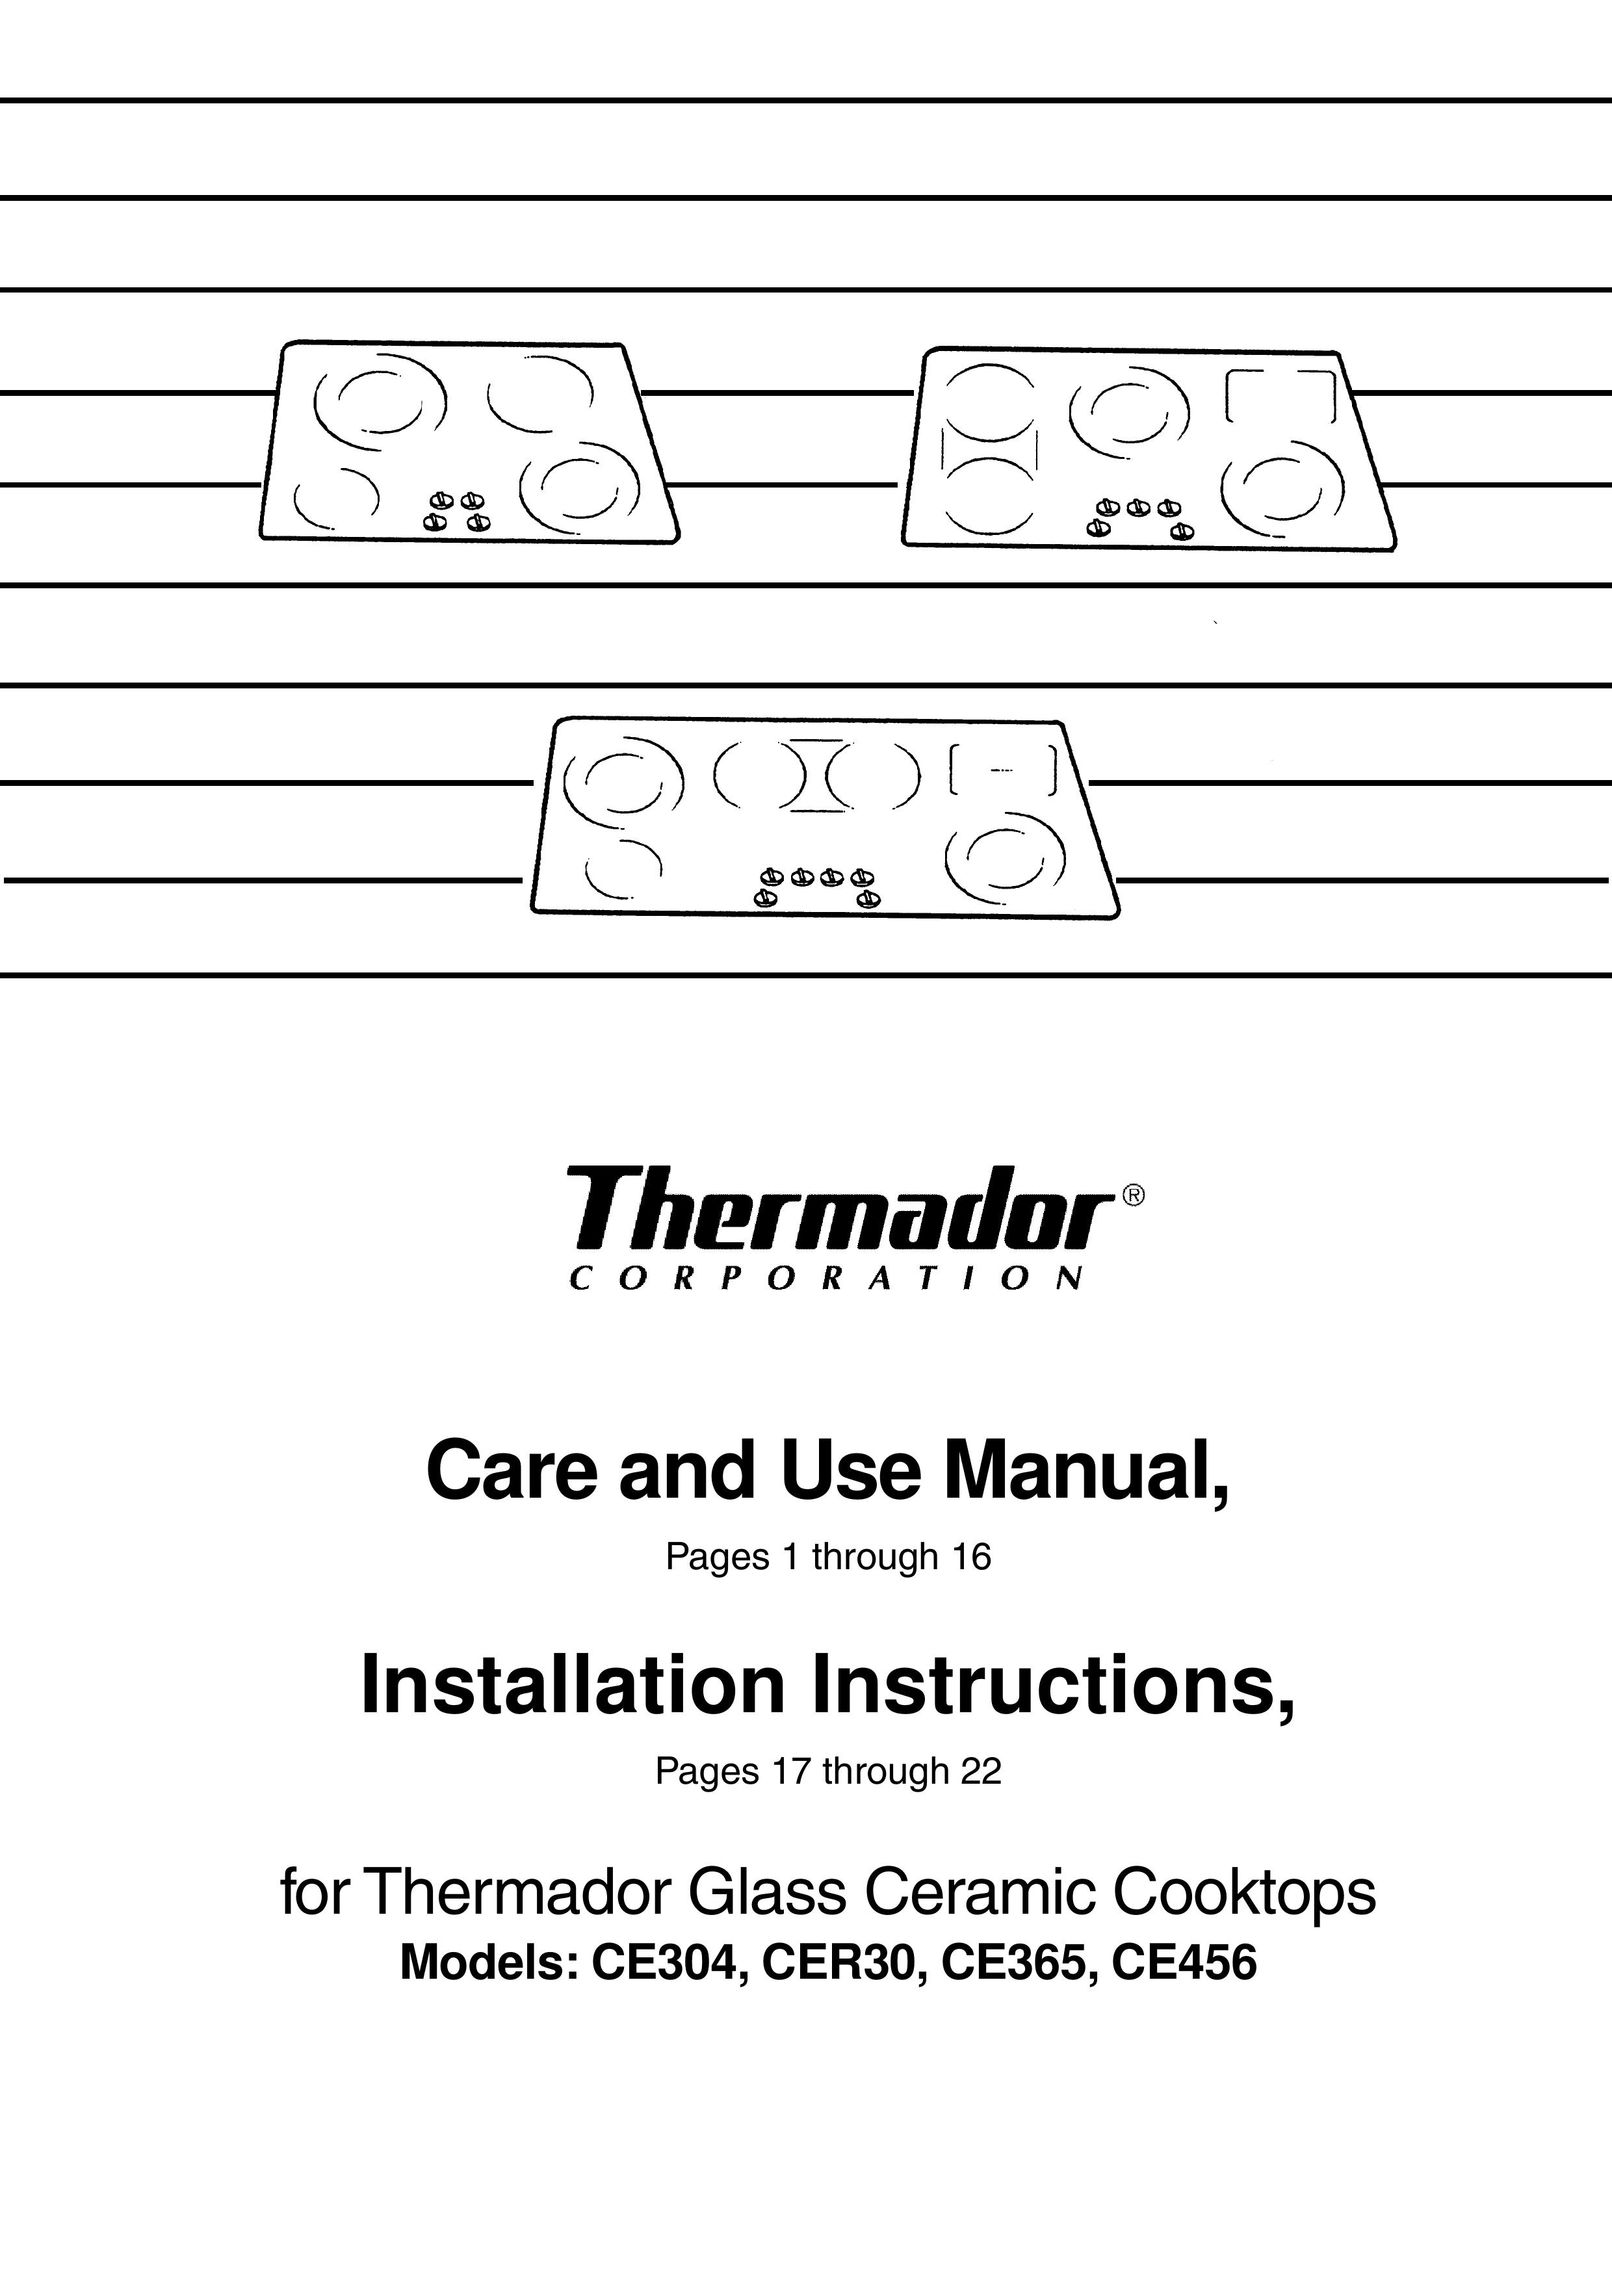 Thermador CE365 Cooktop User Manual